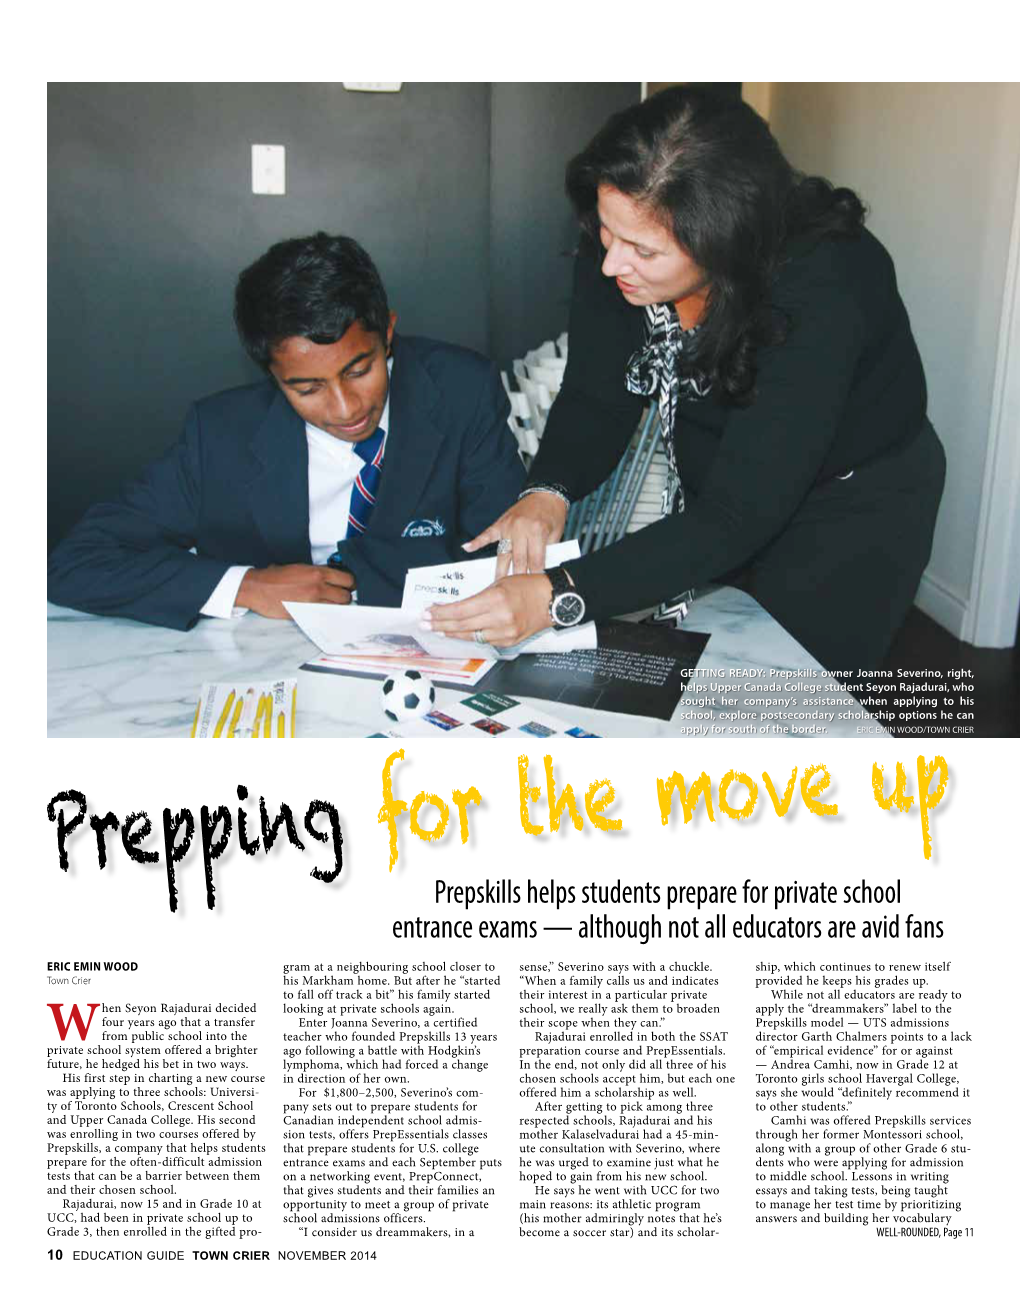 Prepskills Helps Students Prepare for Private School Entrance Exams